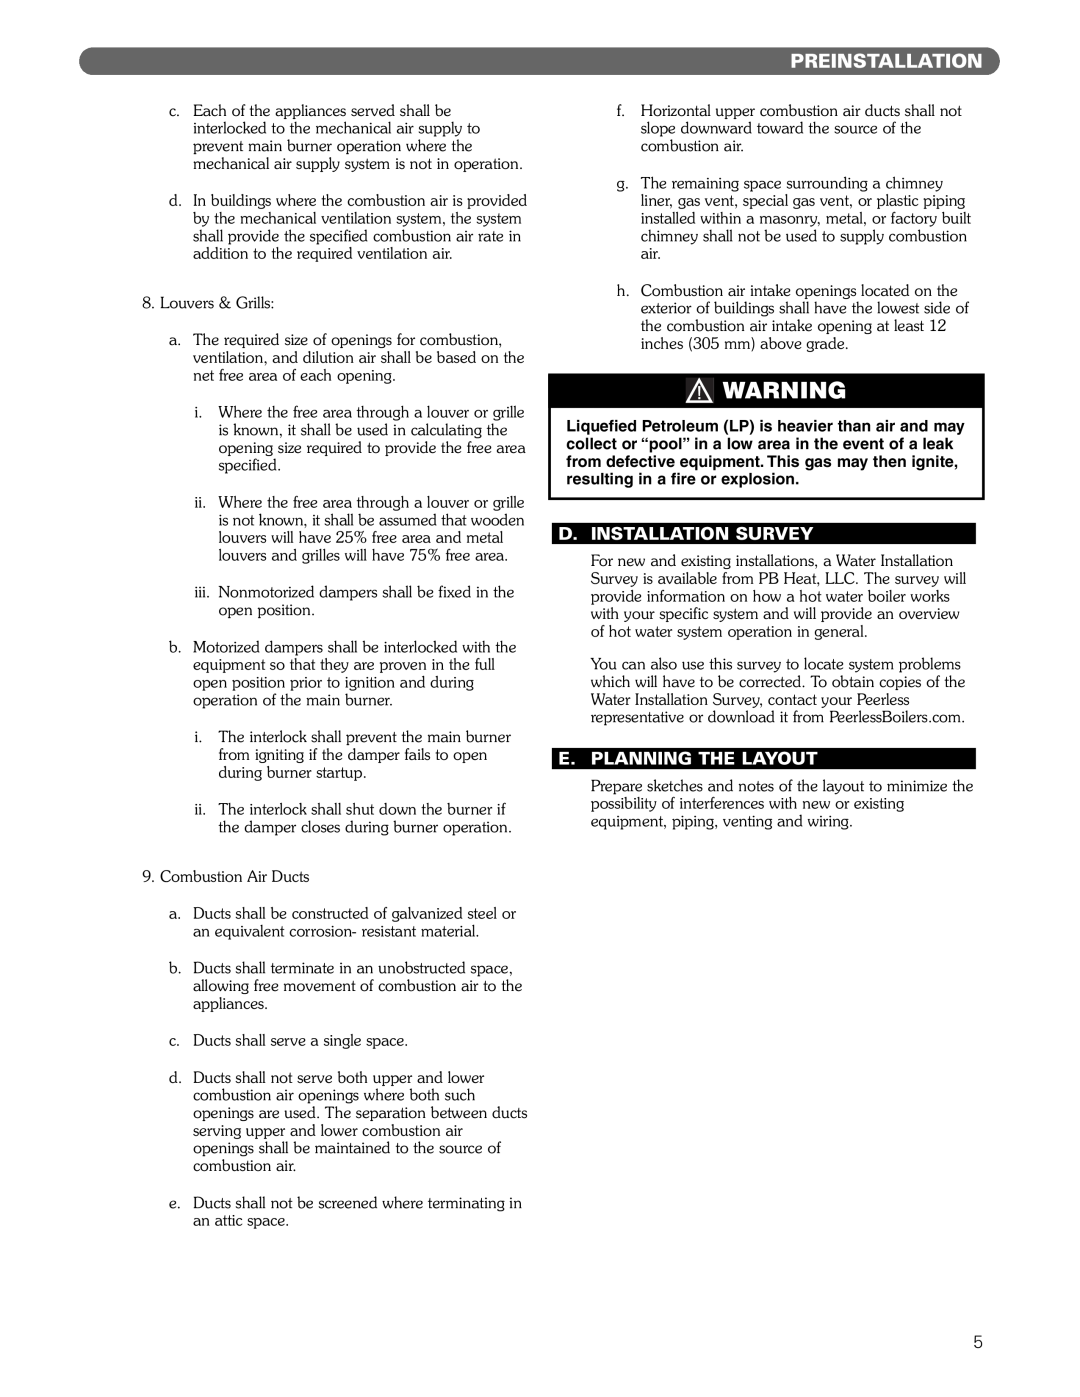 PB Heat DE manual Preinstallation, D.Installation Survey, E.Planning The Layout 